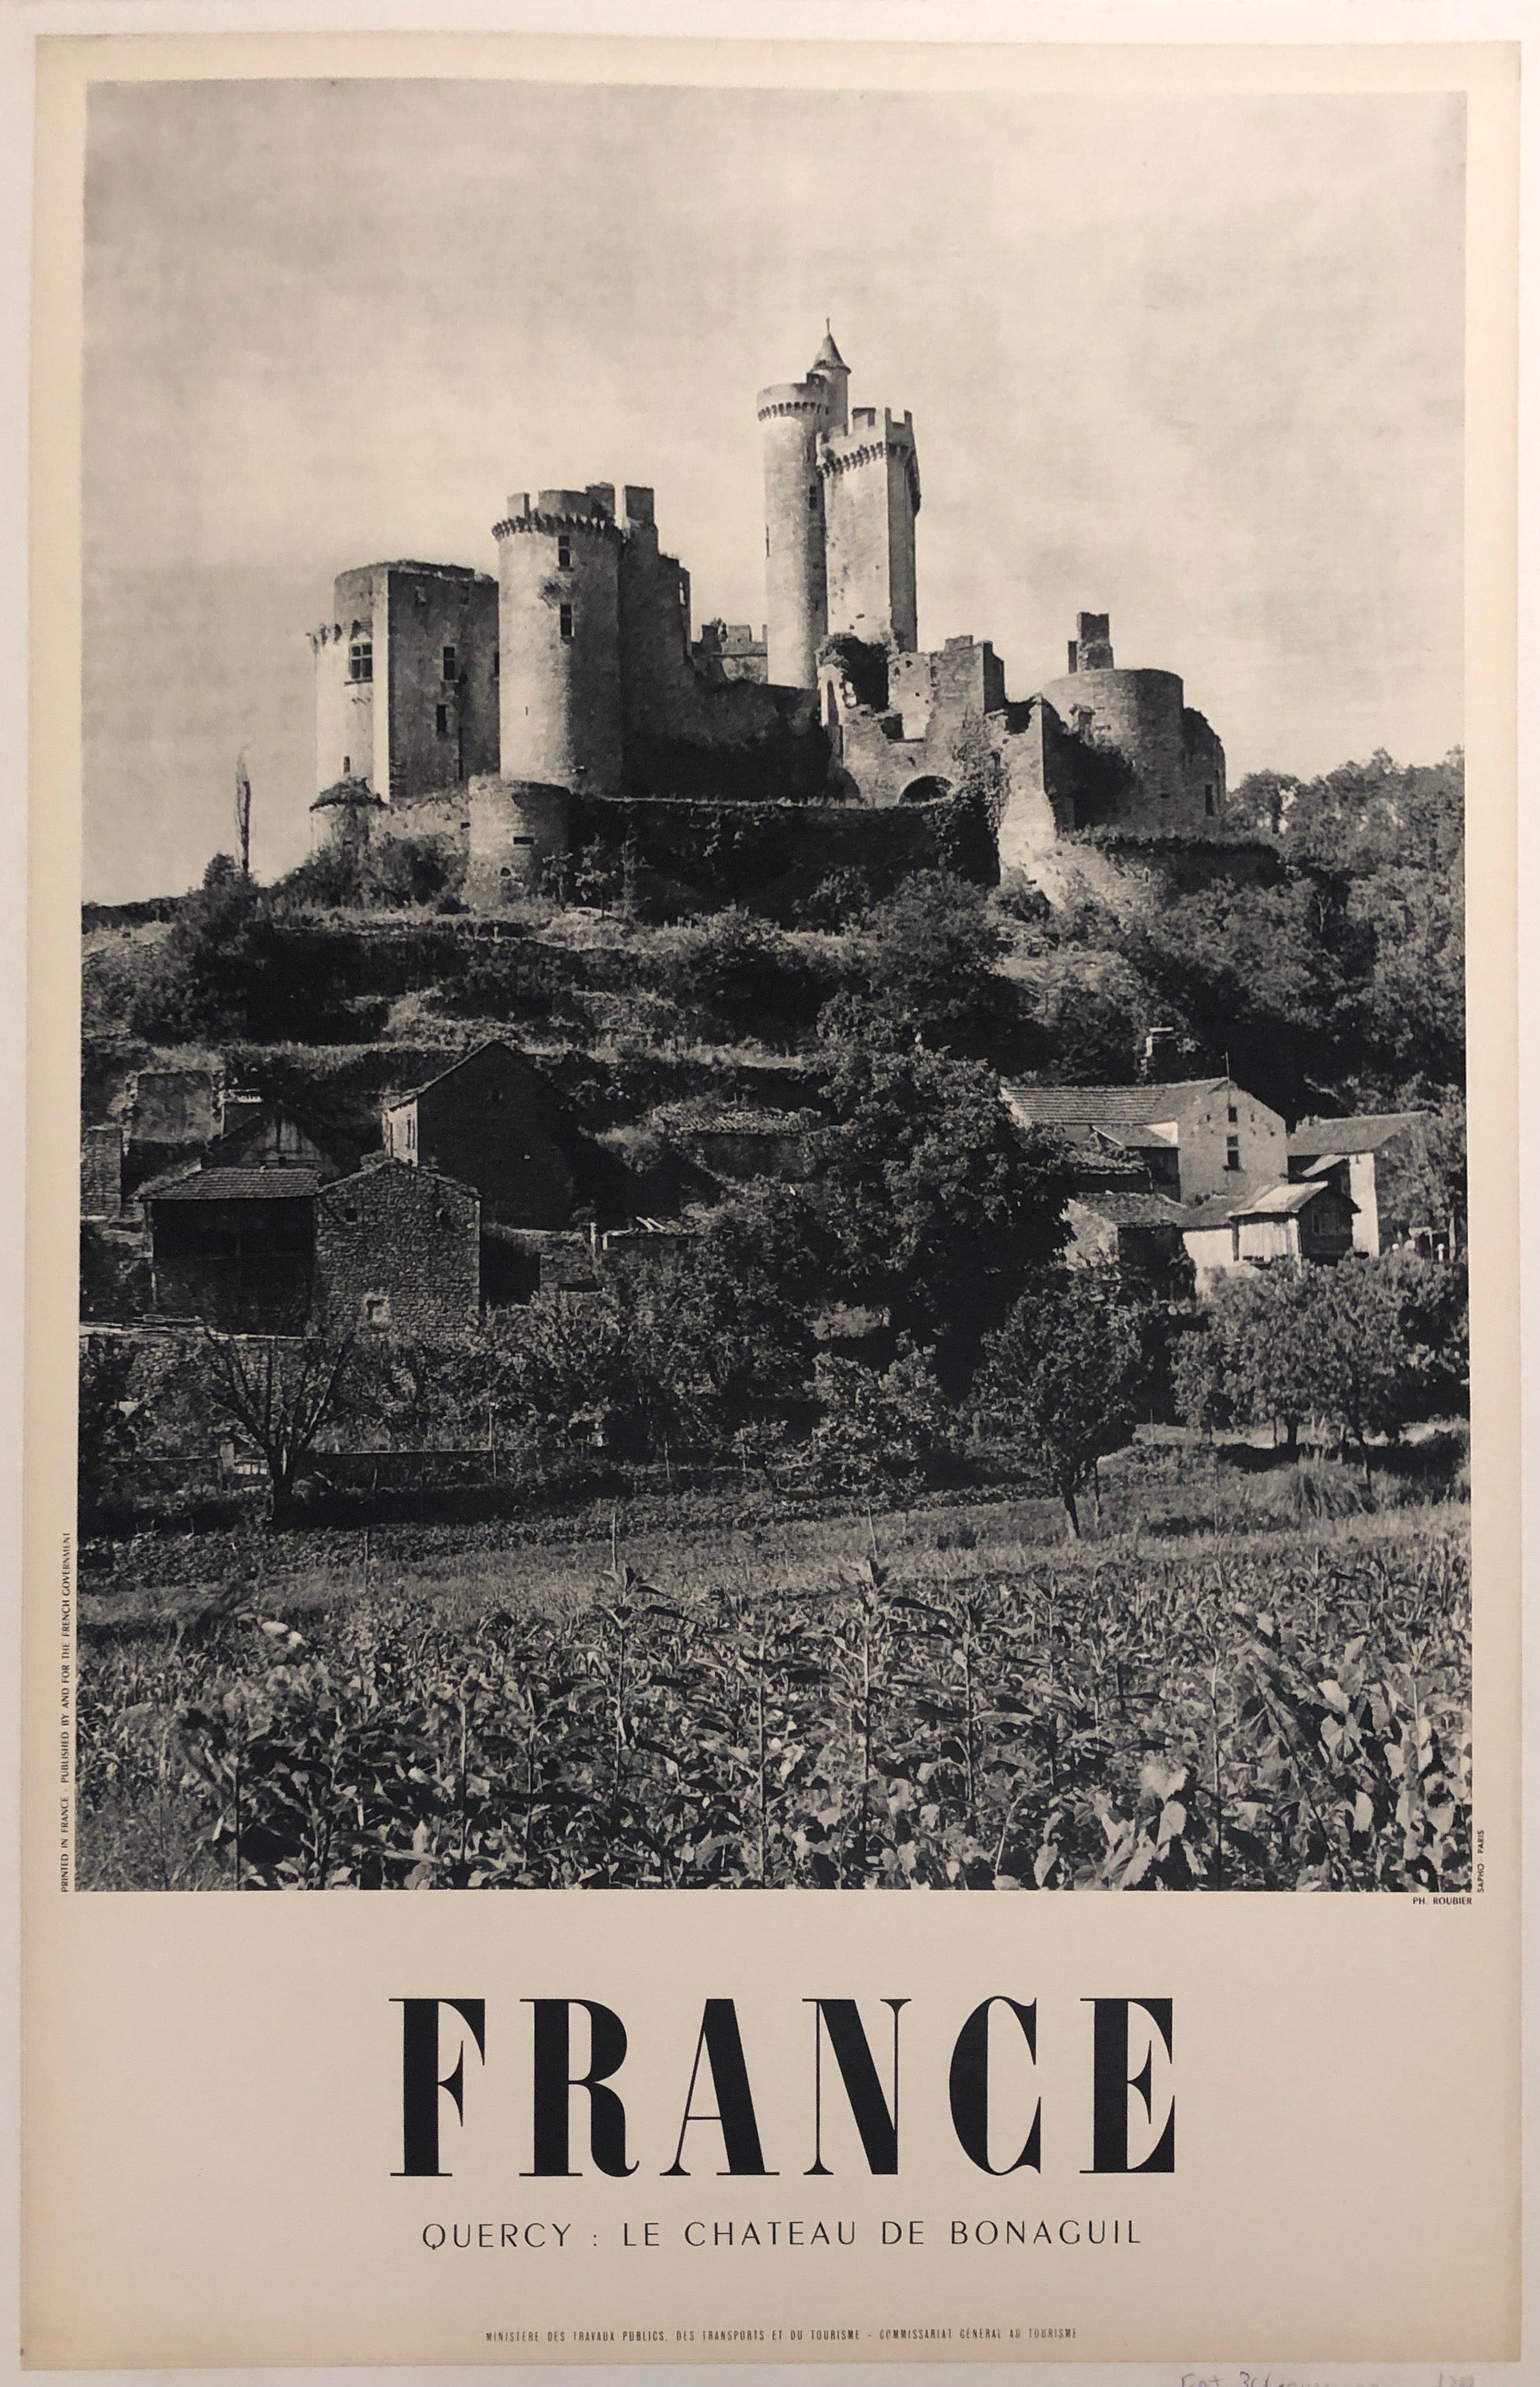 Poster featuring a black and white photo of Le Chateau de Bonaguil